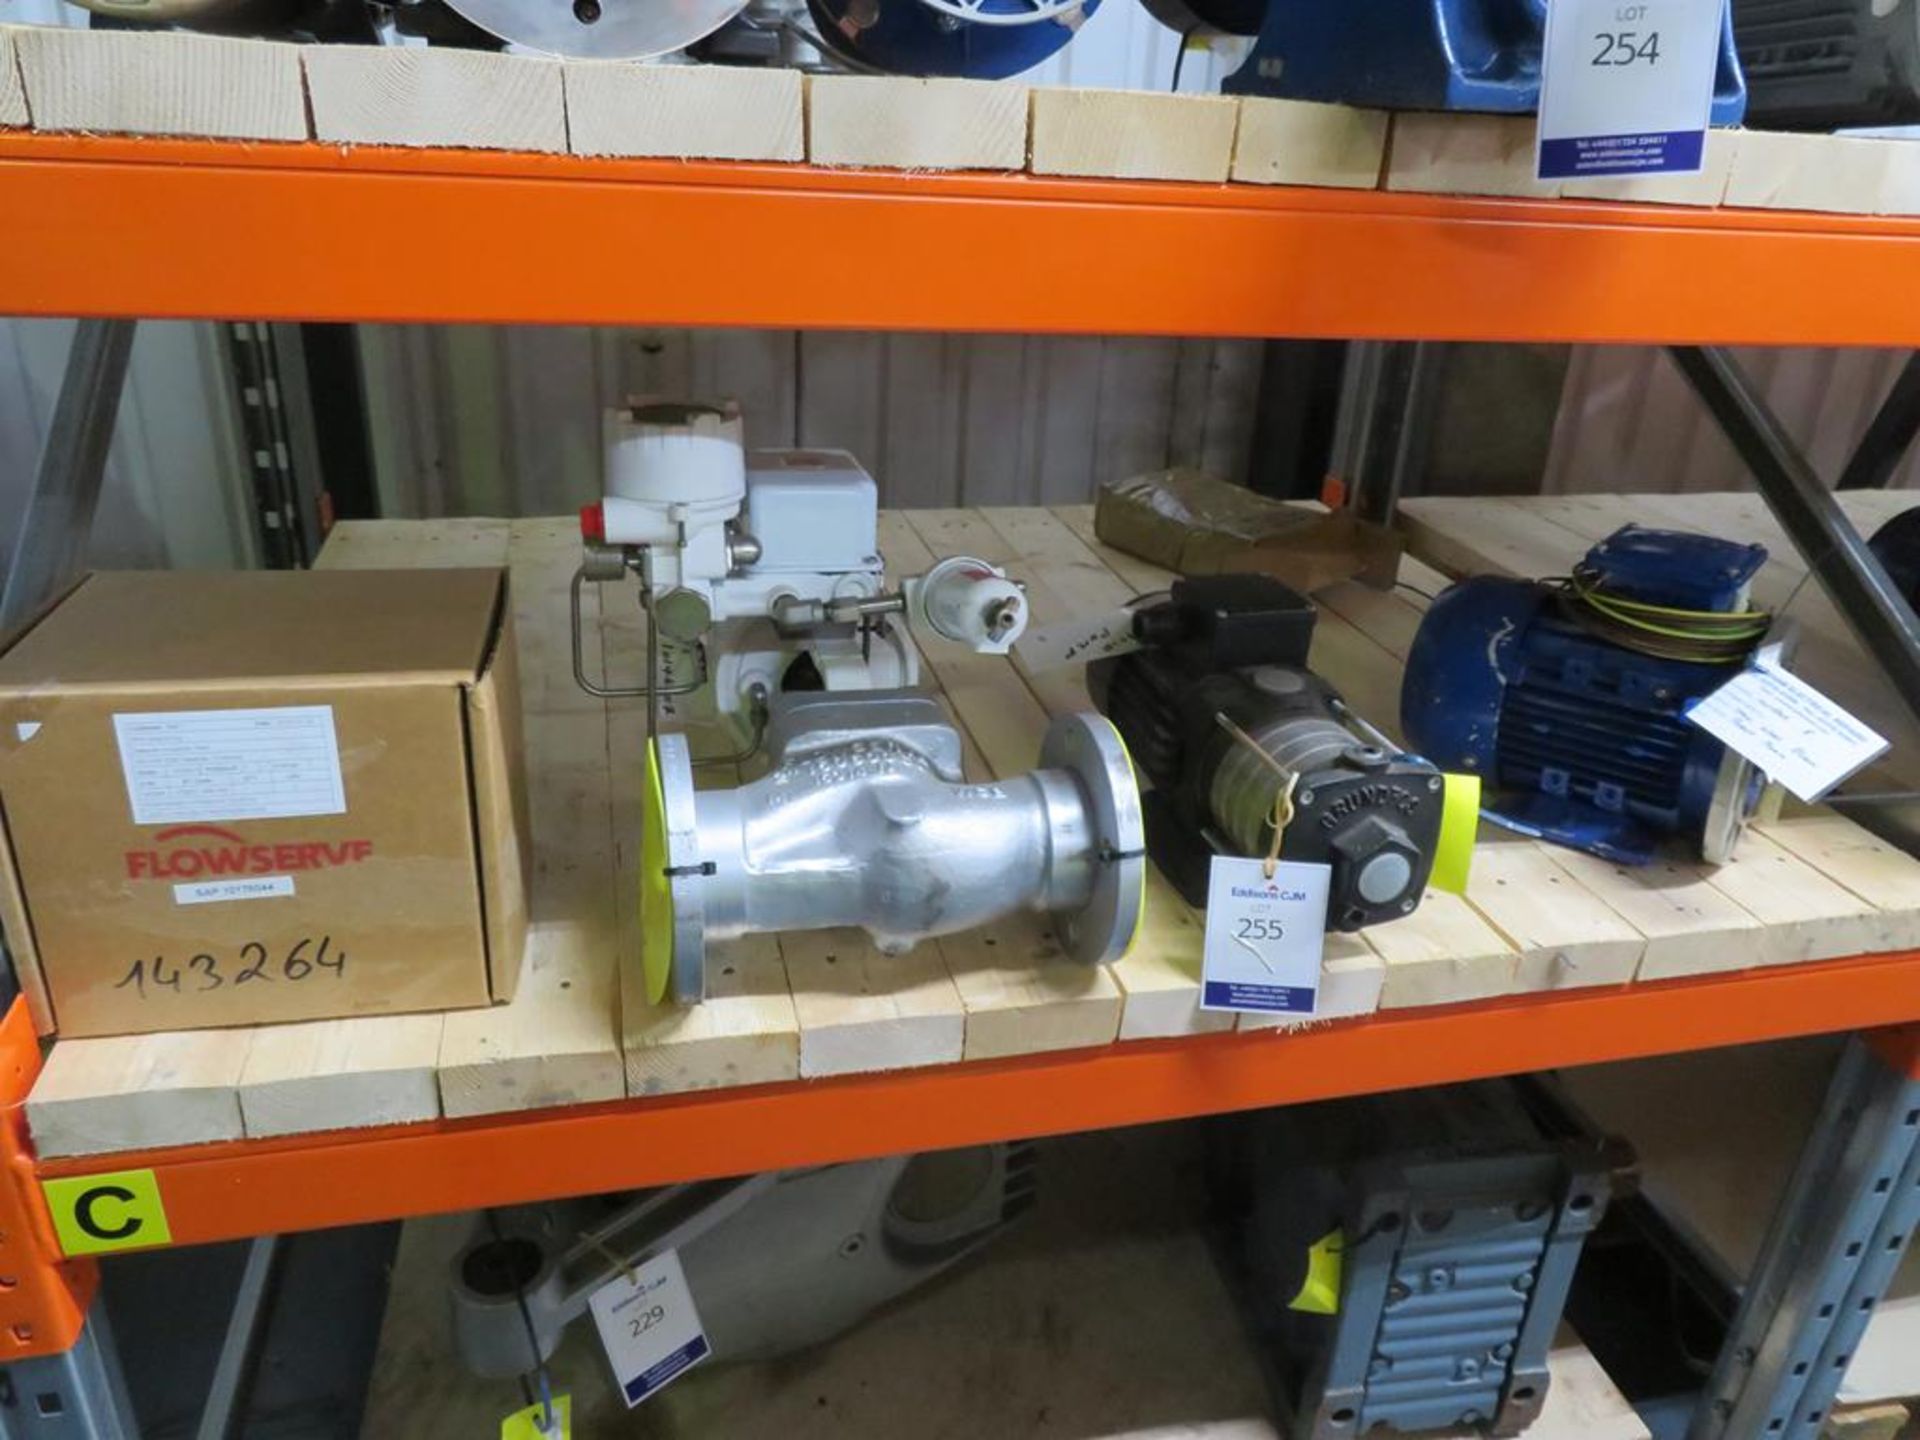 Shelf to contain Grundfos H 43A5 1105 P20144 pump, valetk control 2I- Vacteck 2 valve, CMG 1.5KW mot